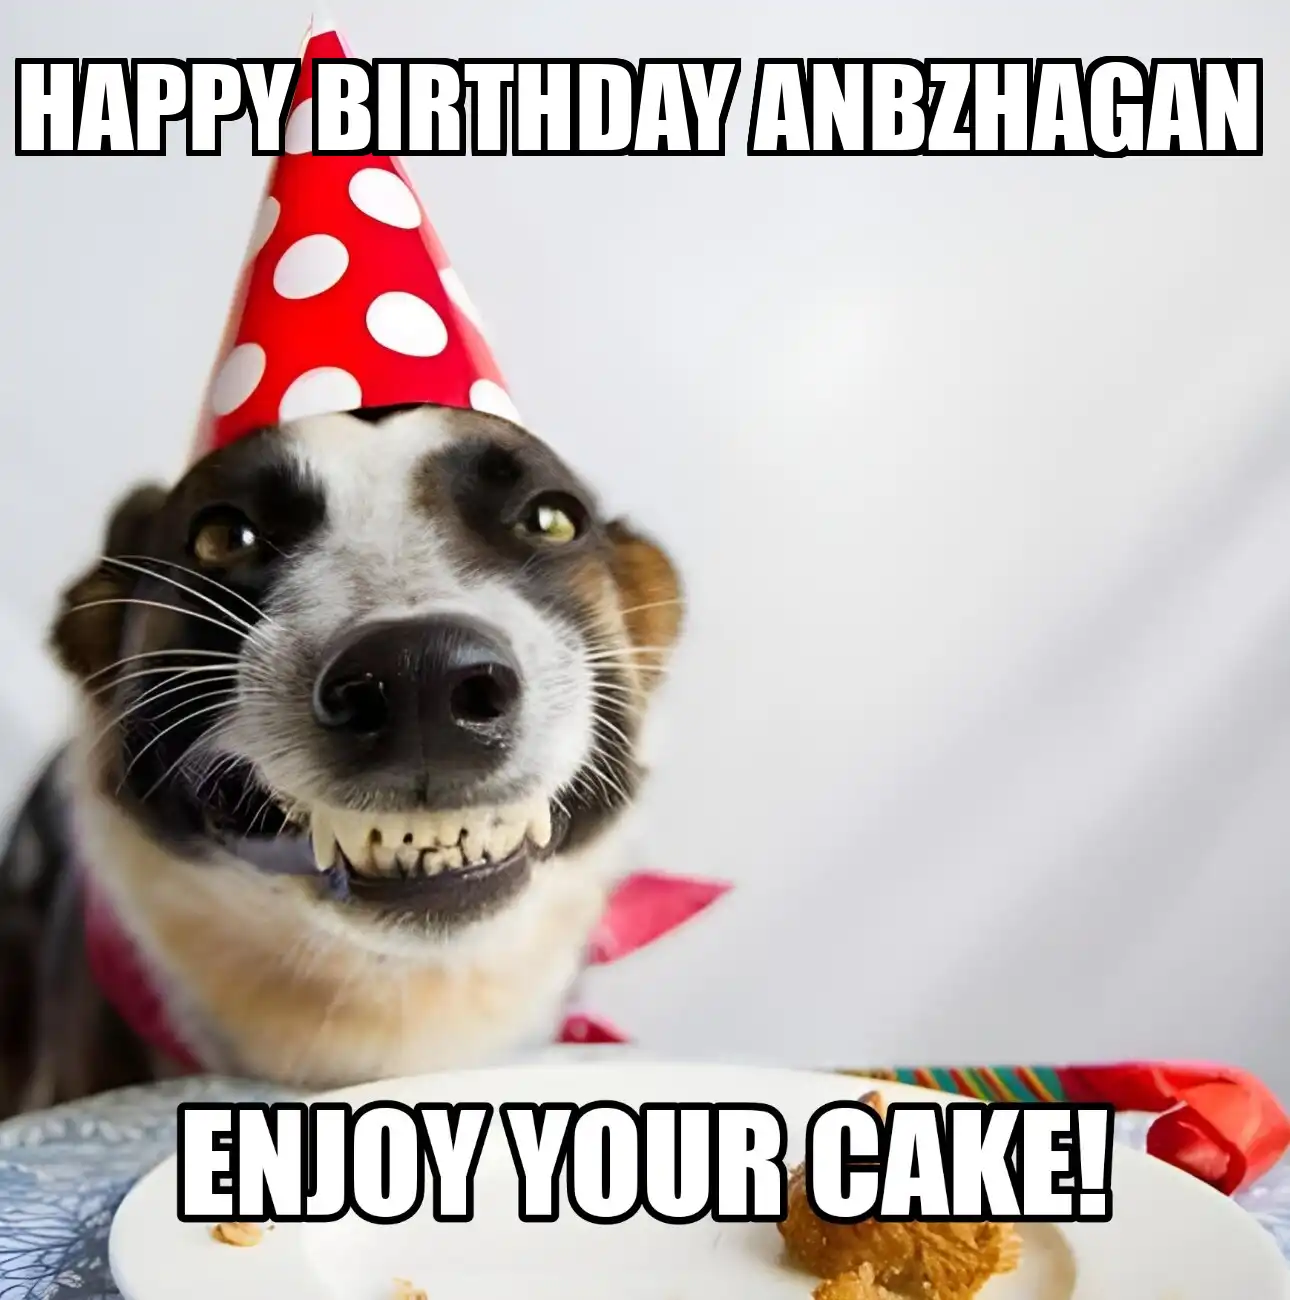 Happy Birthday Anbzhagan Enjoy Your Cake Dog Meme